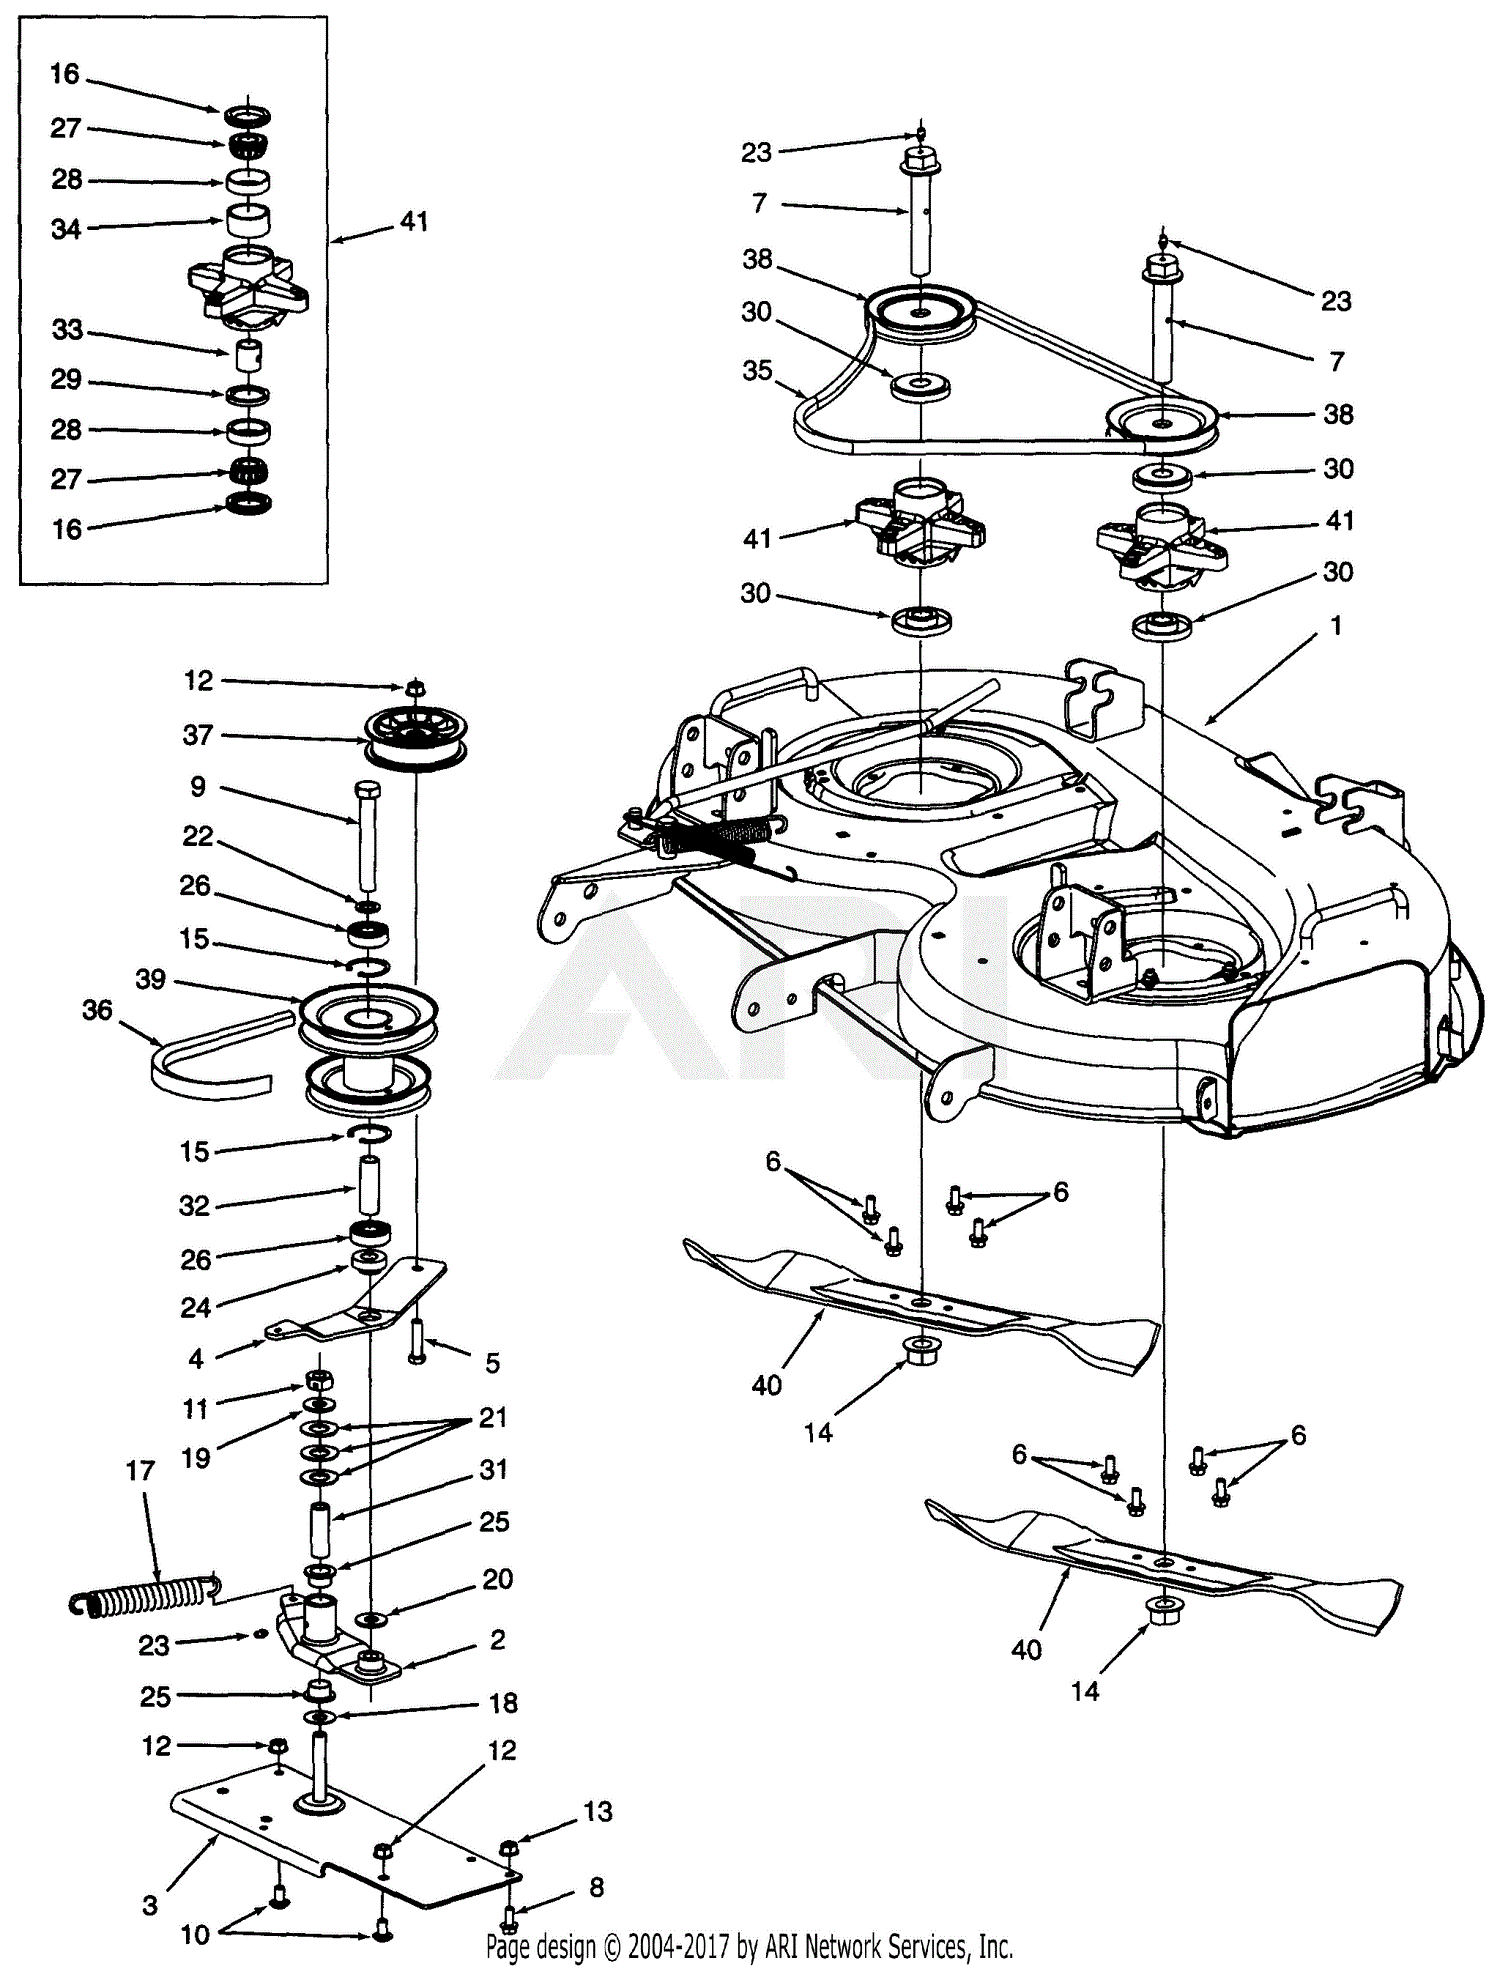 Mtd Inch Drive Belt Diagram Wiring Diagram Info